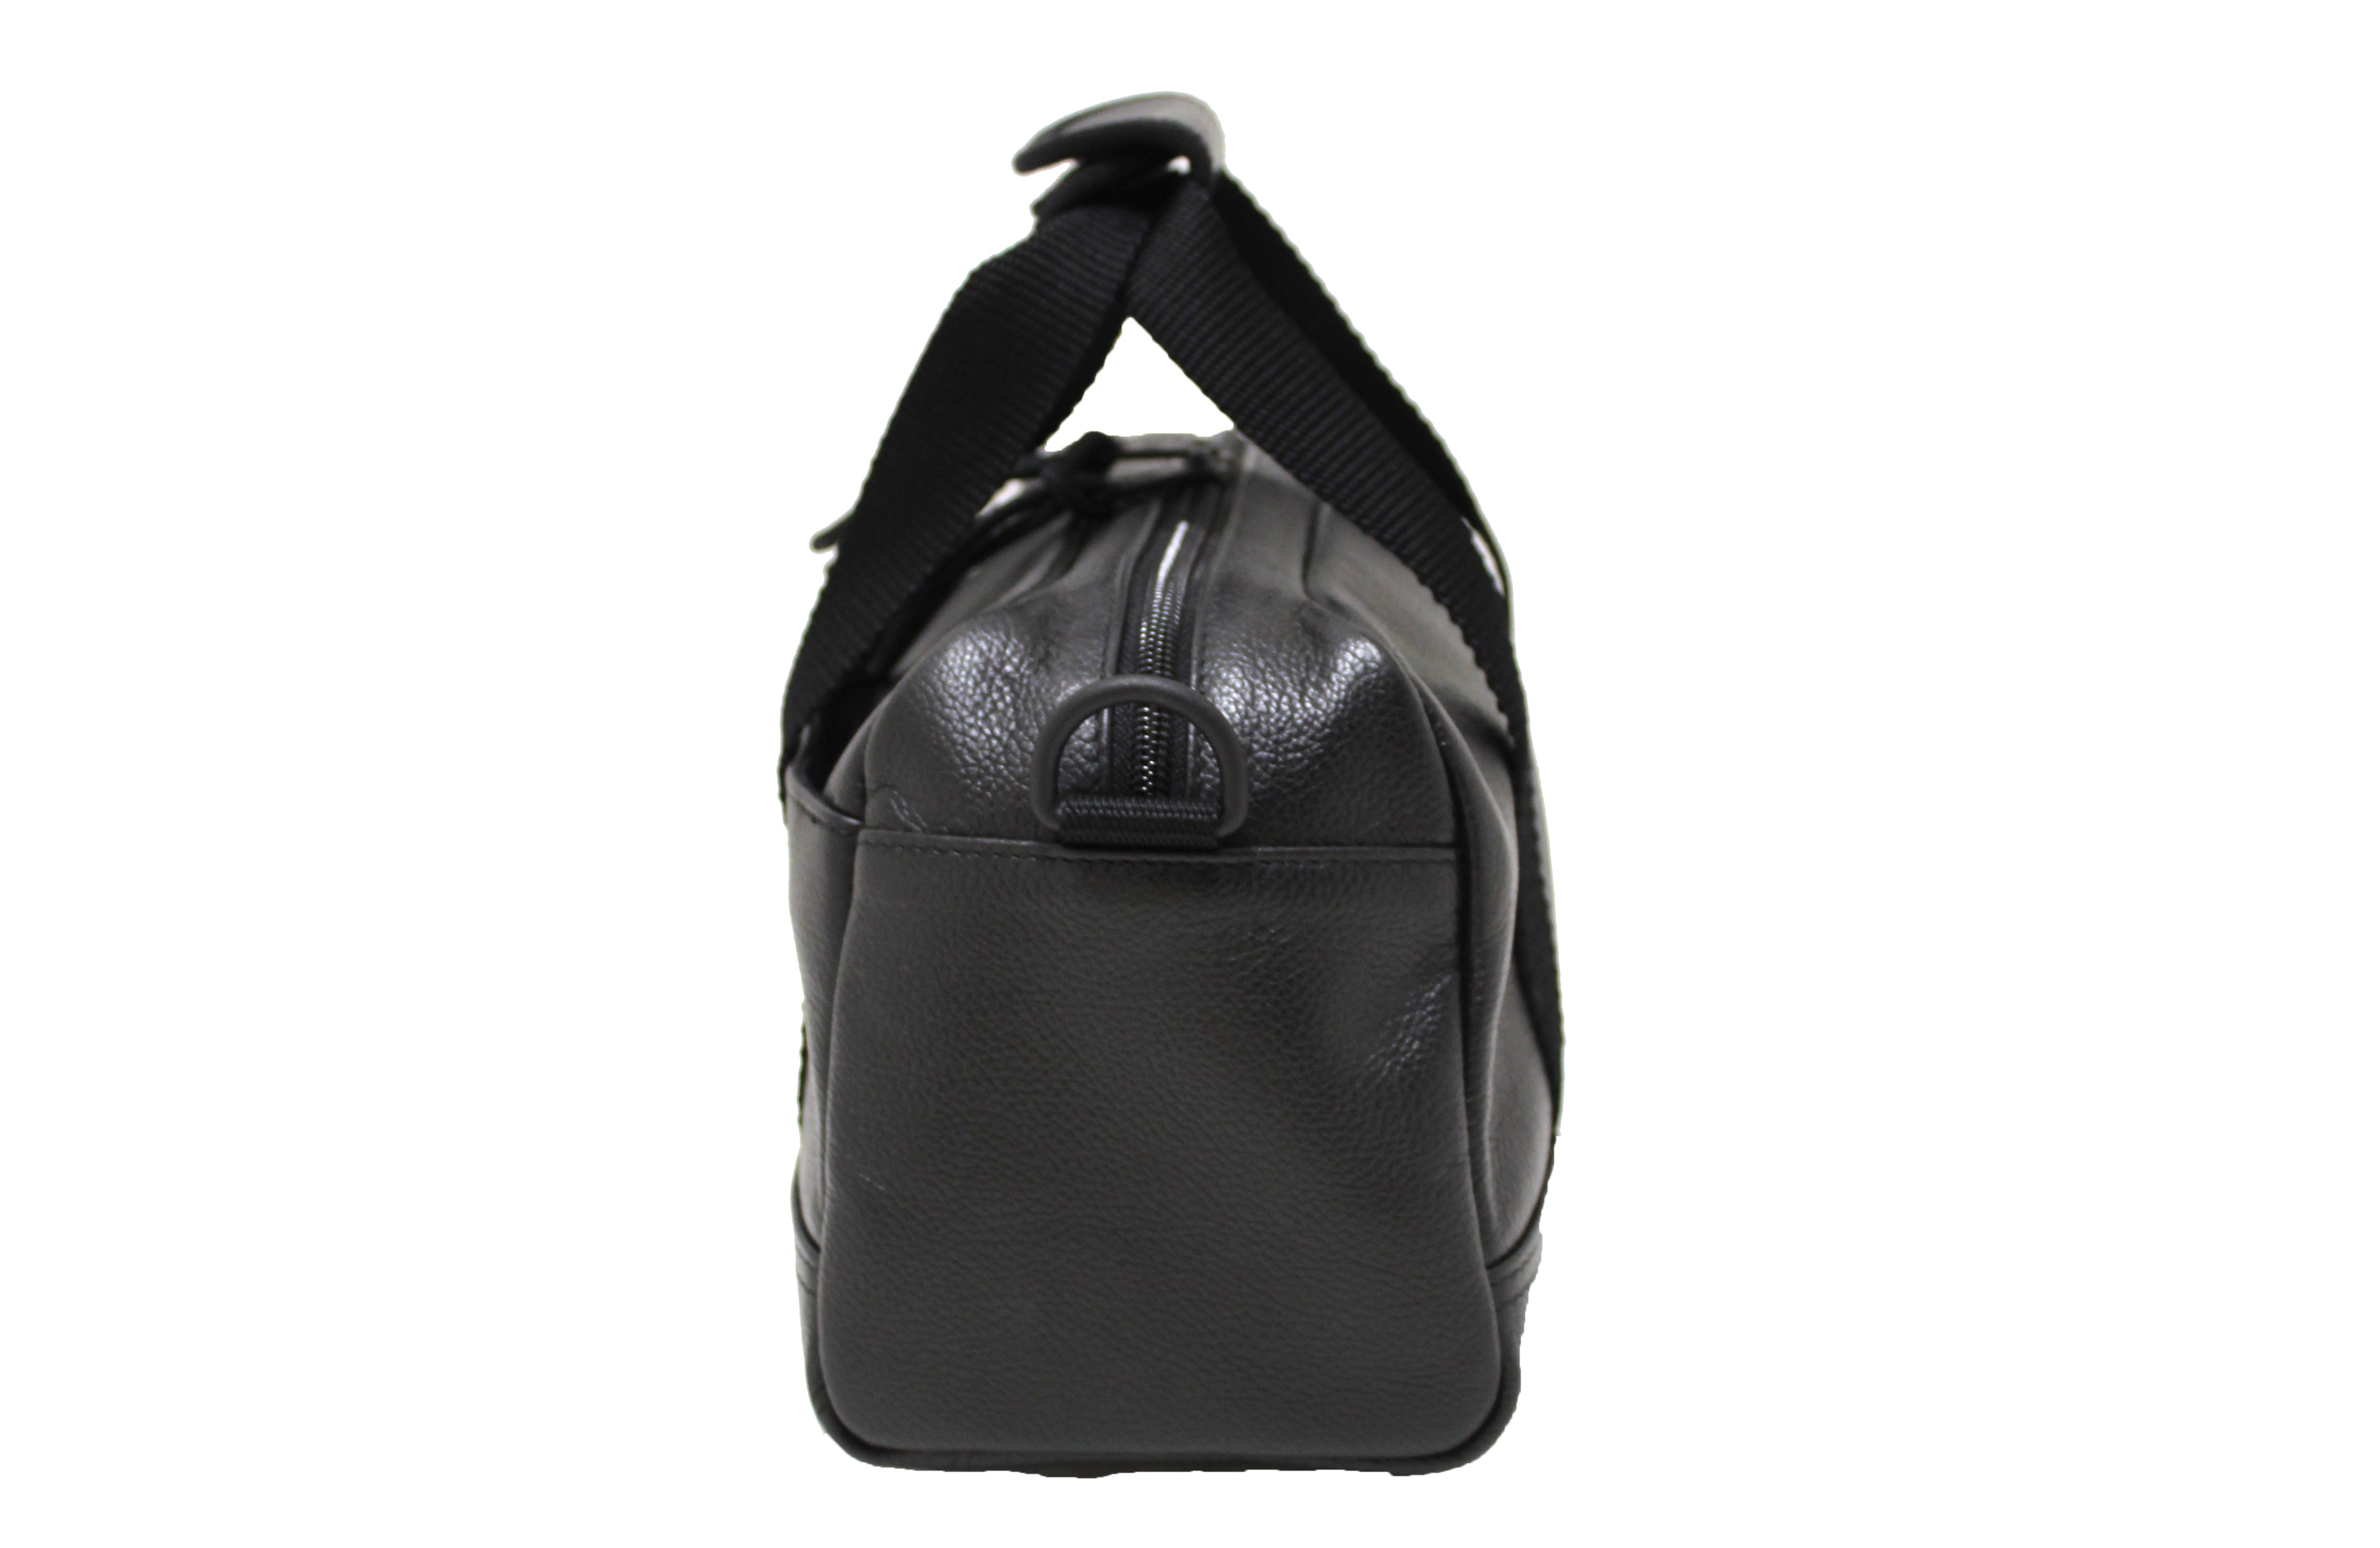 Authentic Balenciaga Black Grained Calfskin Leather Explorer Small Duffle Bag